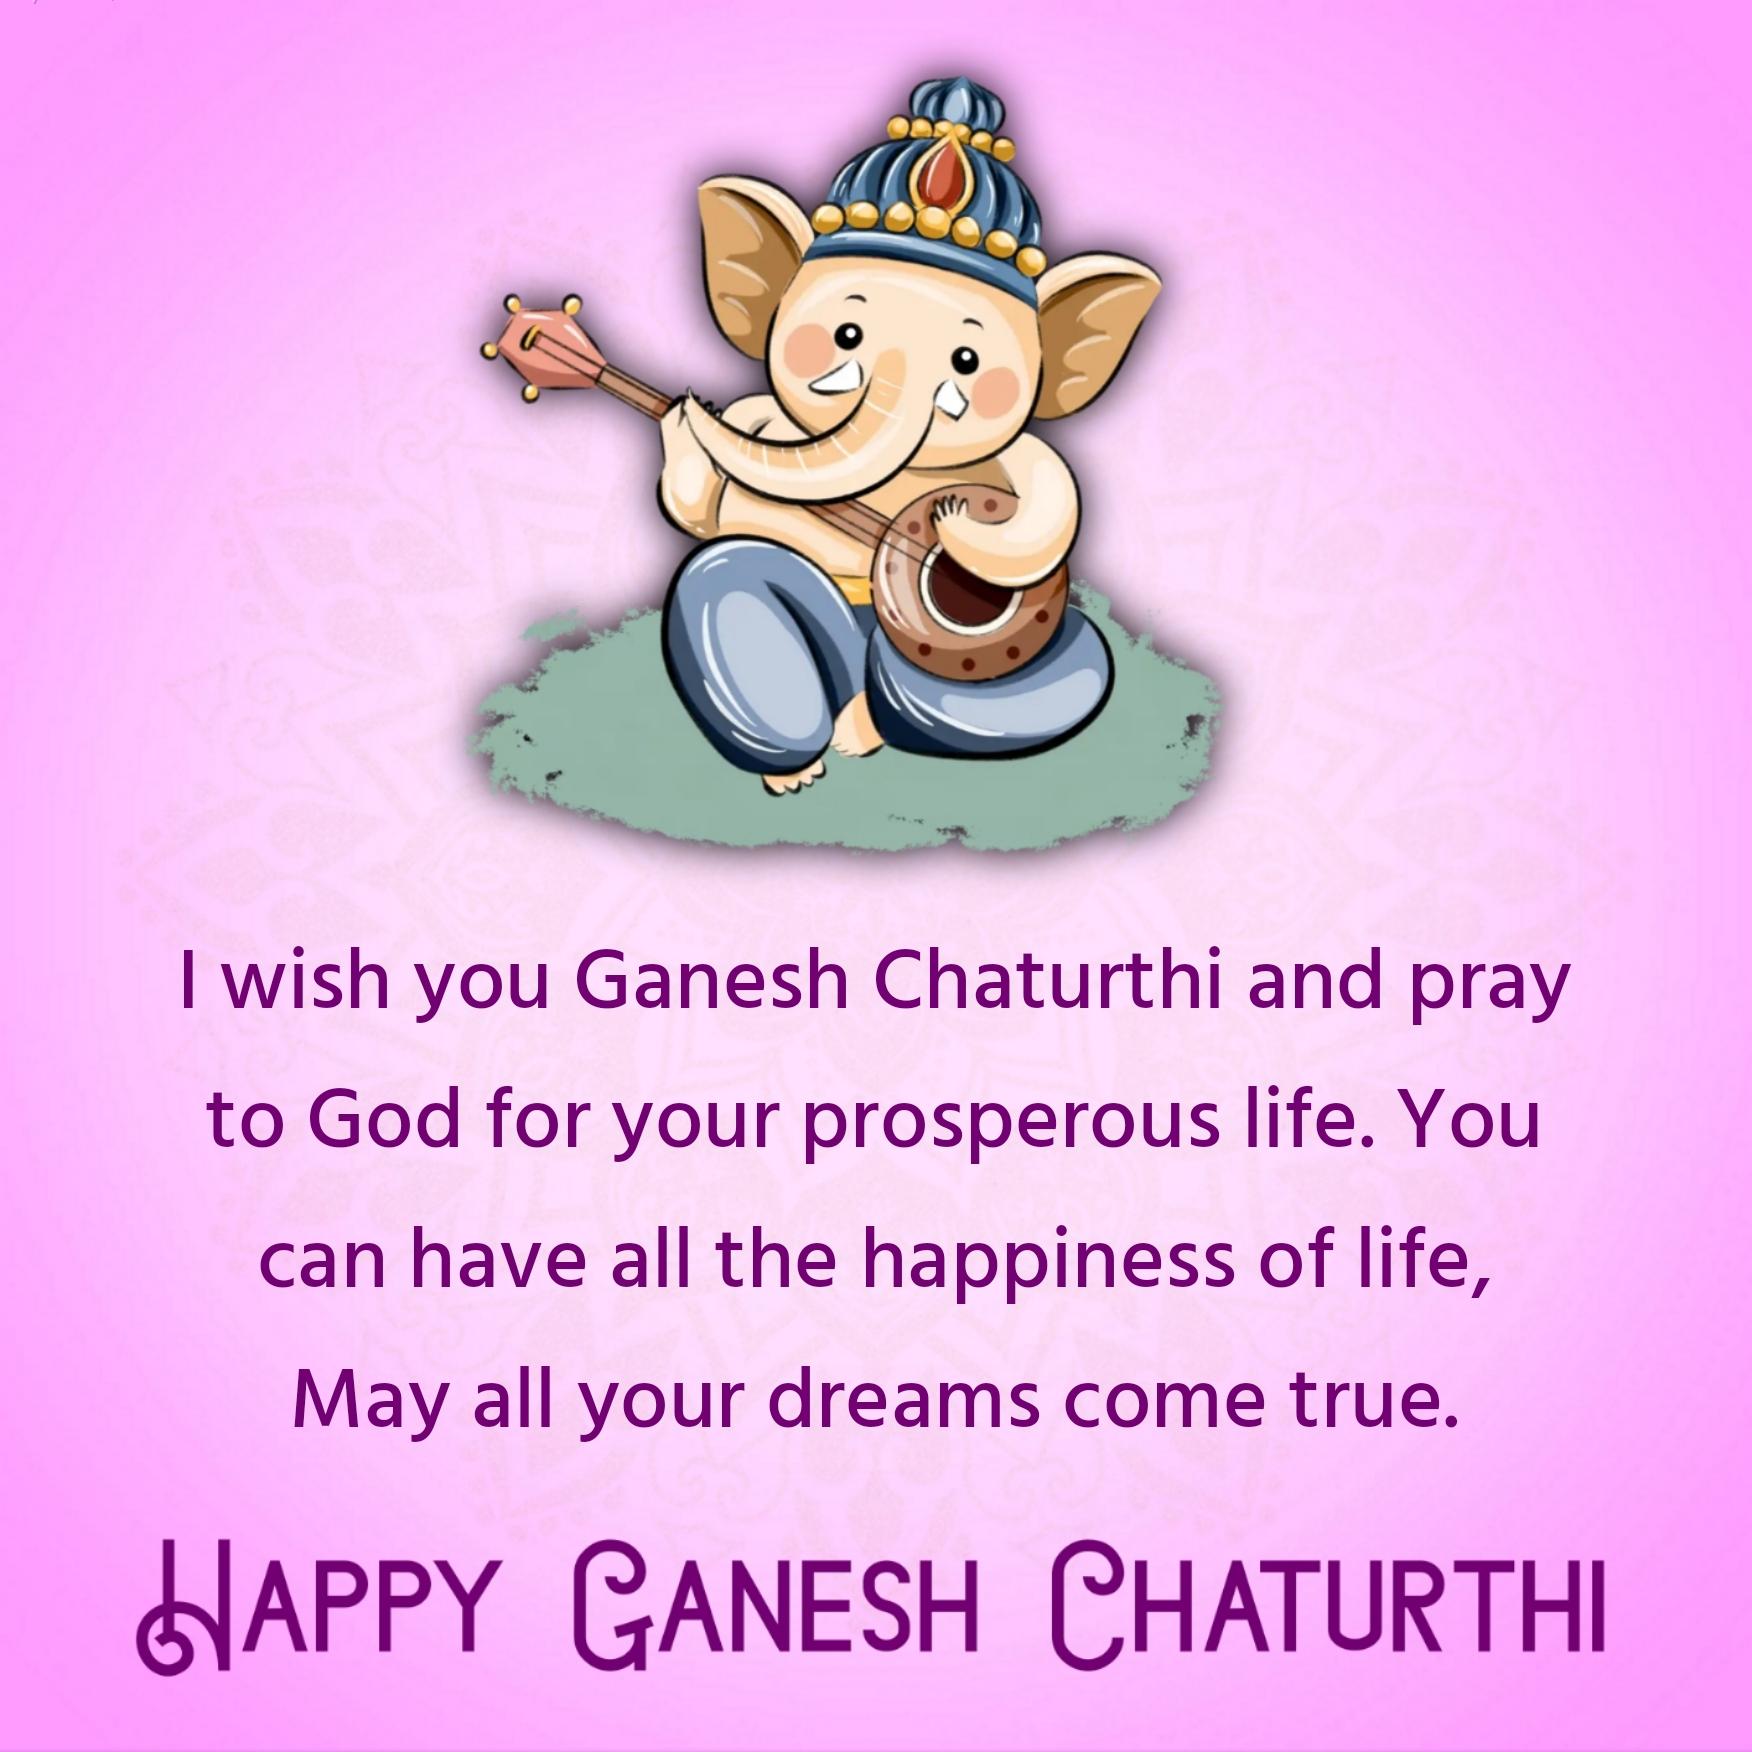 I wish you Ganesh Chaturthi and pray to God